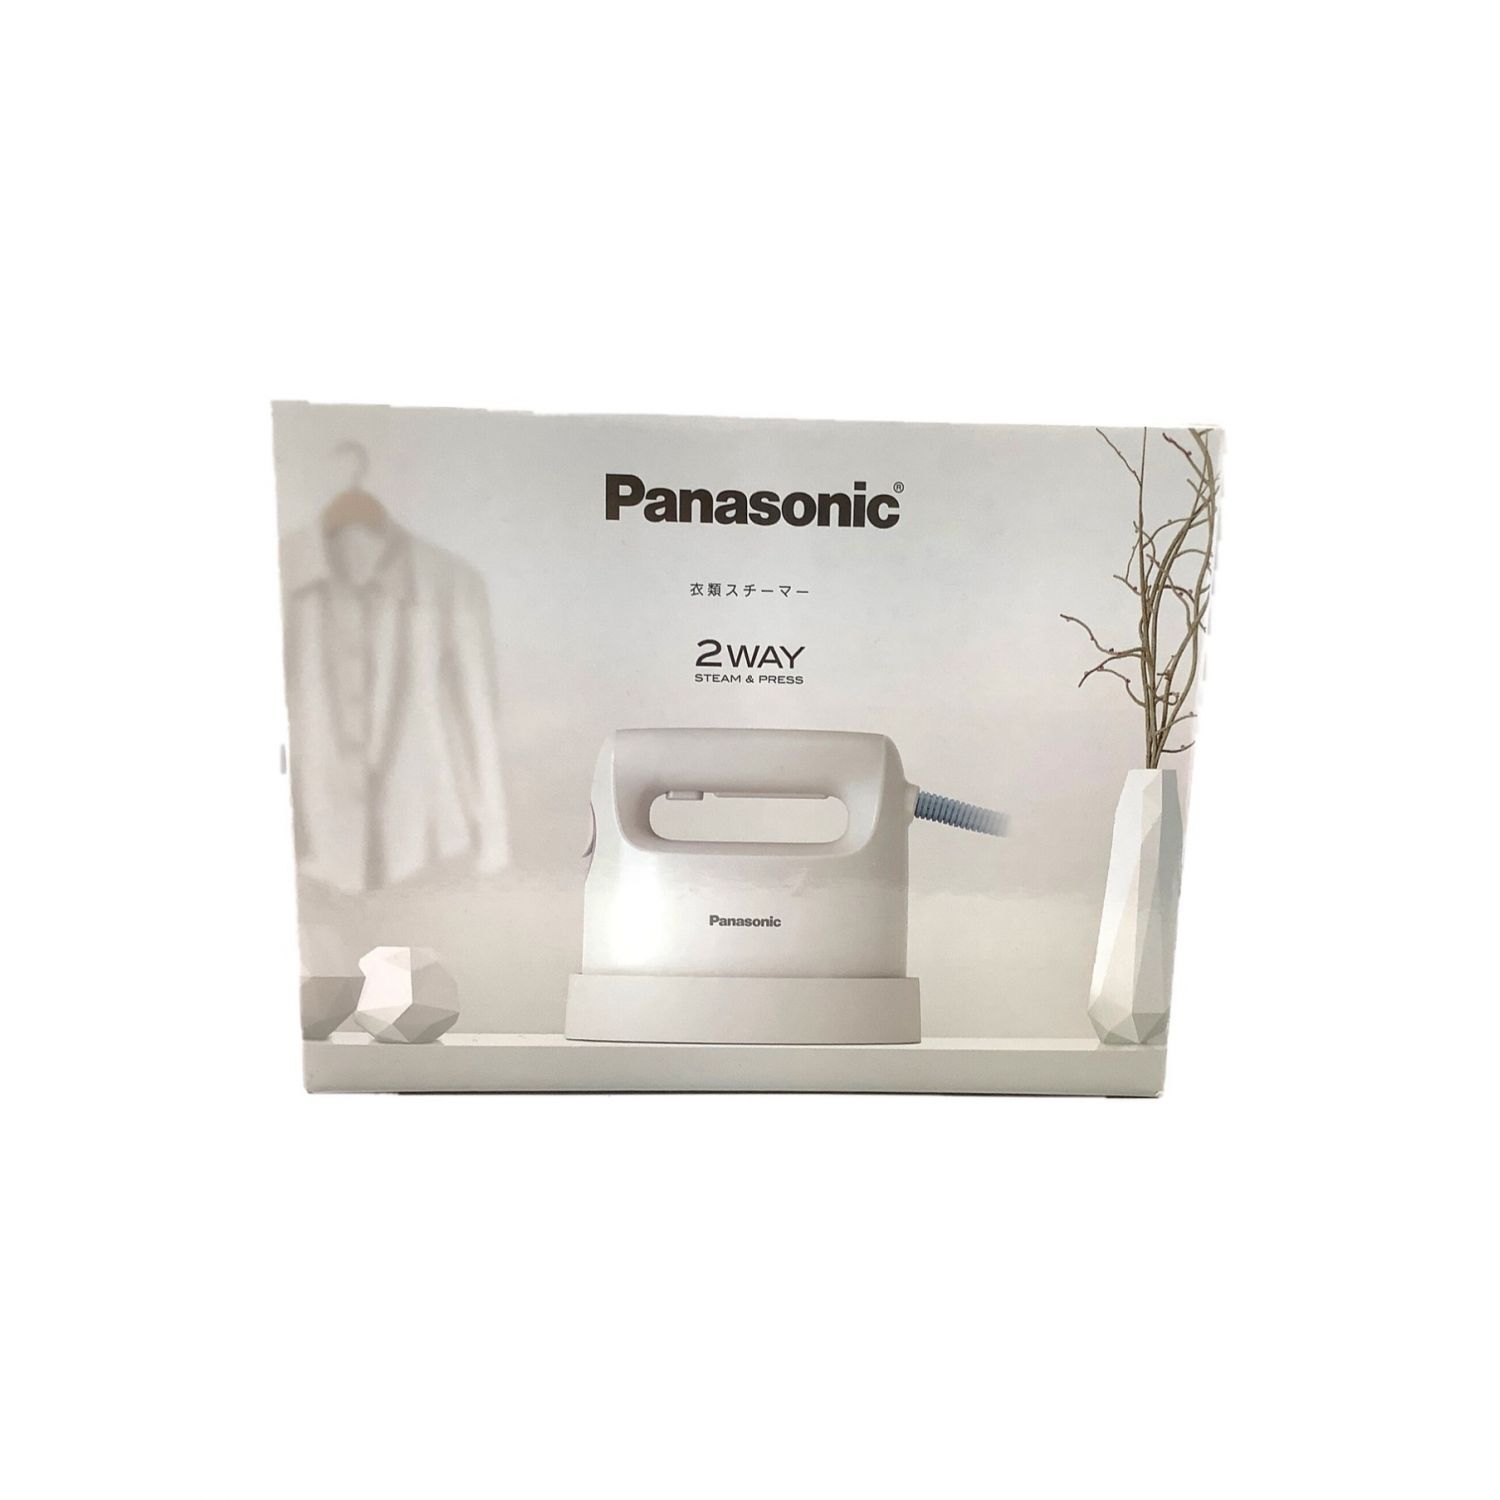 Panasonic 衣類スチーマー NI-FS420-W ホワイト - アイロン